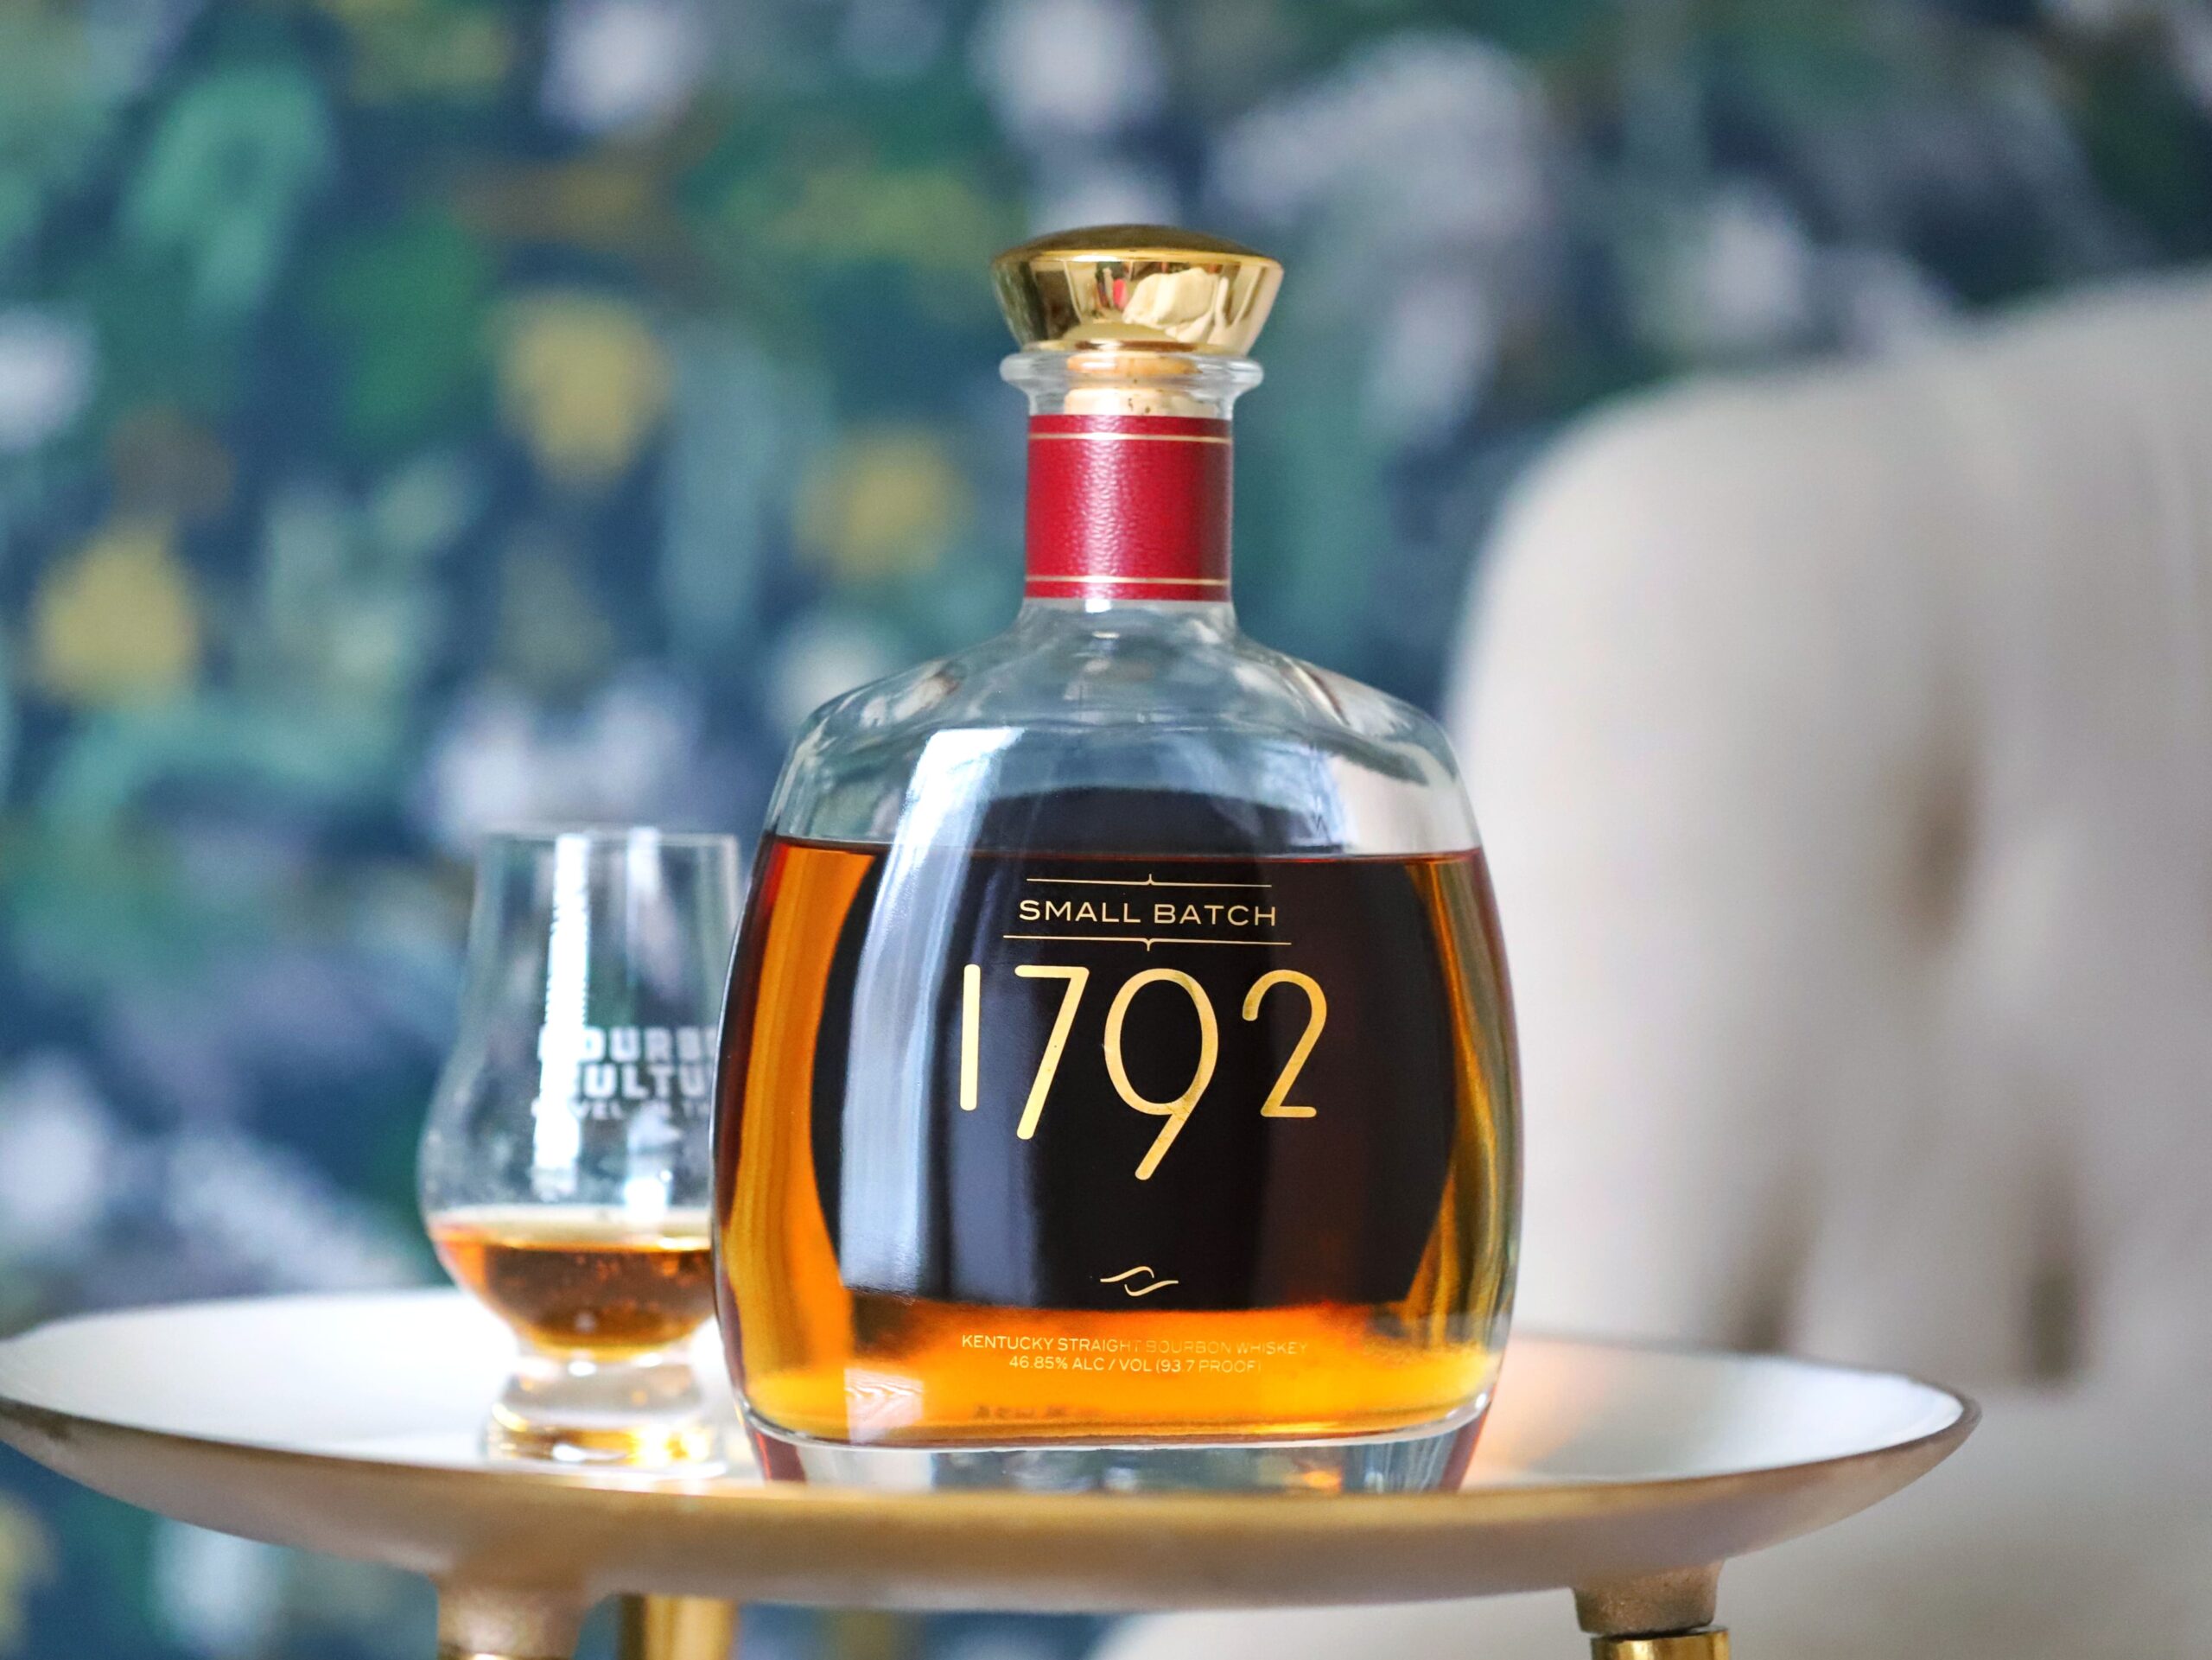 1792 Small Batch Bourbon Review